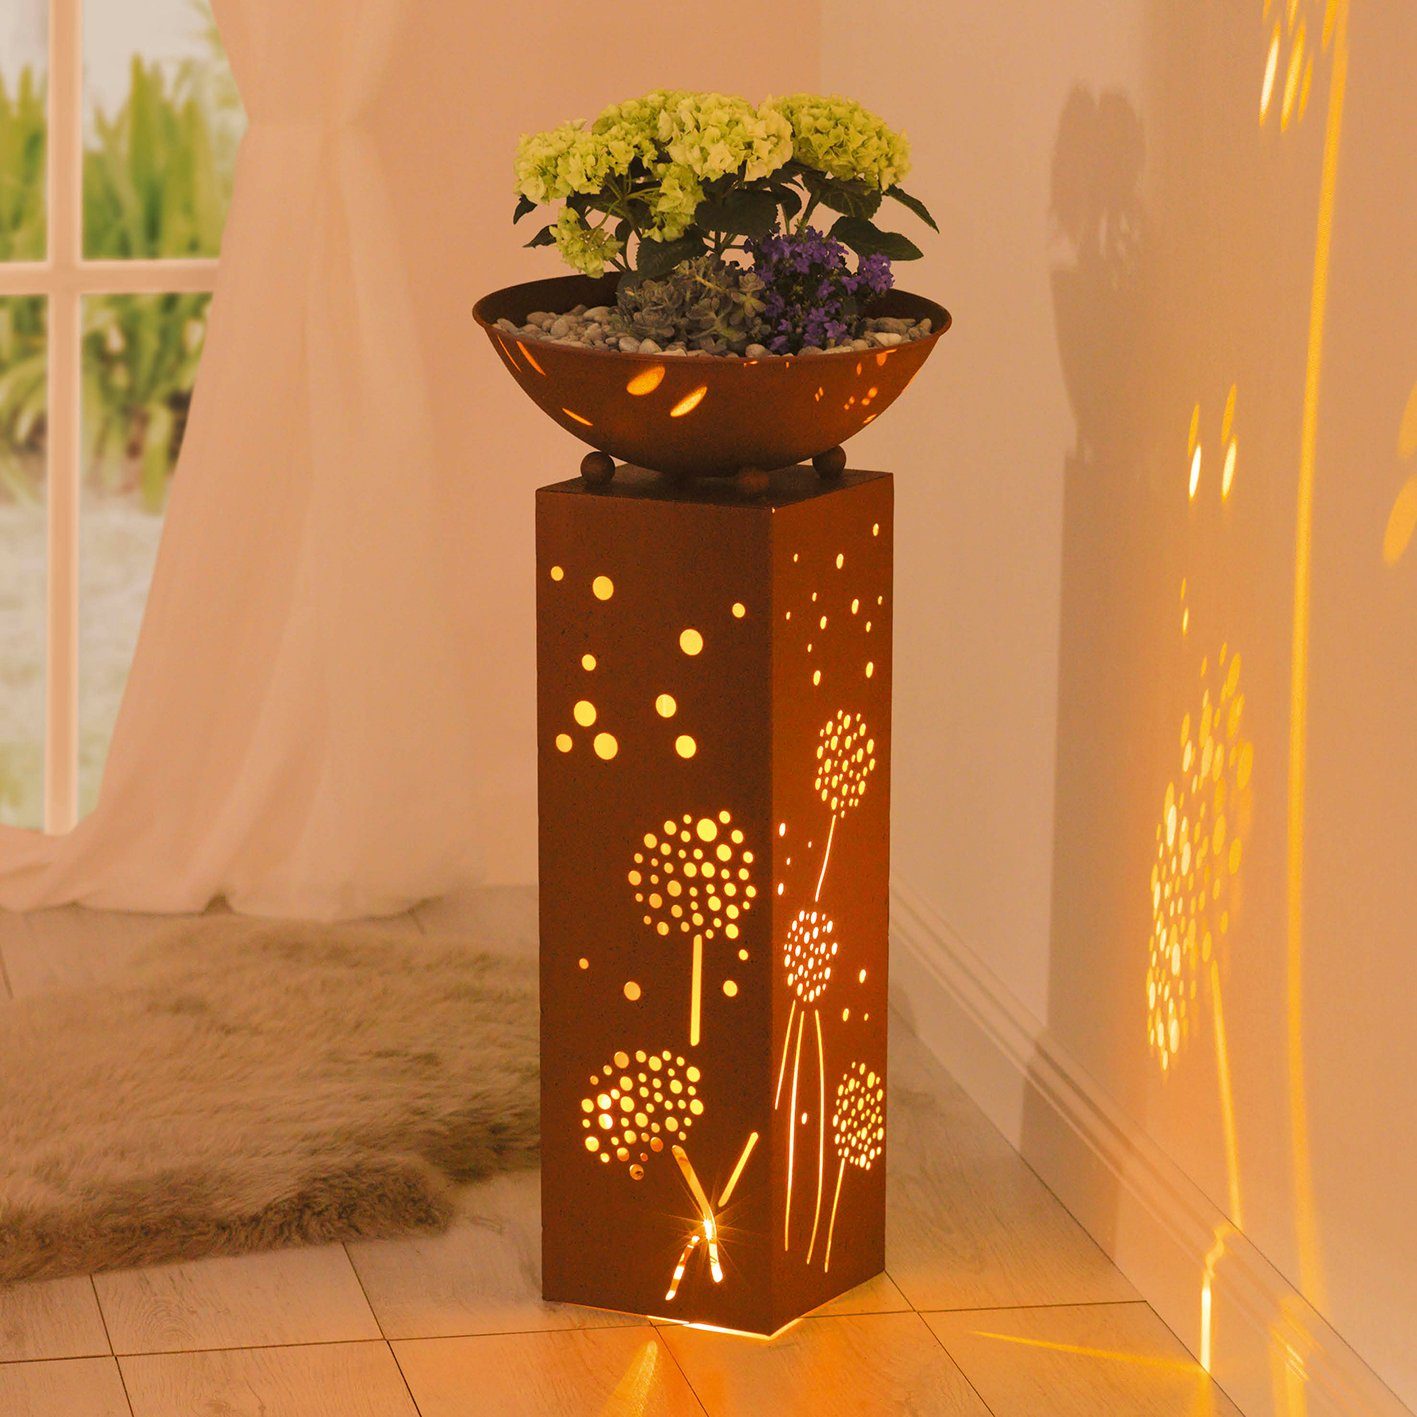 Hoberg Dekosäule Pusteblume, LED Pflanzschale Außen Deko Beleuchtung Rost-Optik 72cm Säule